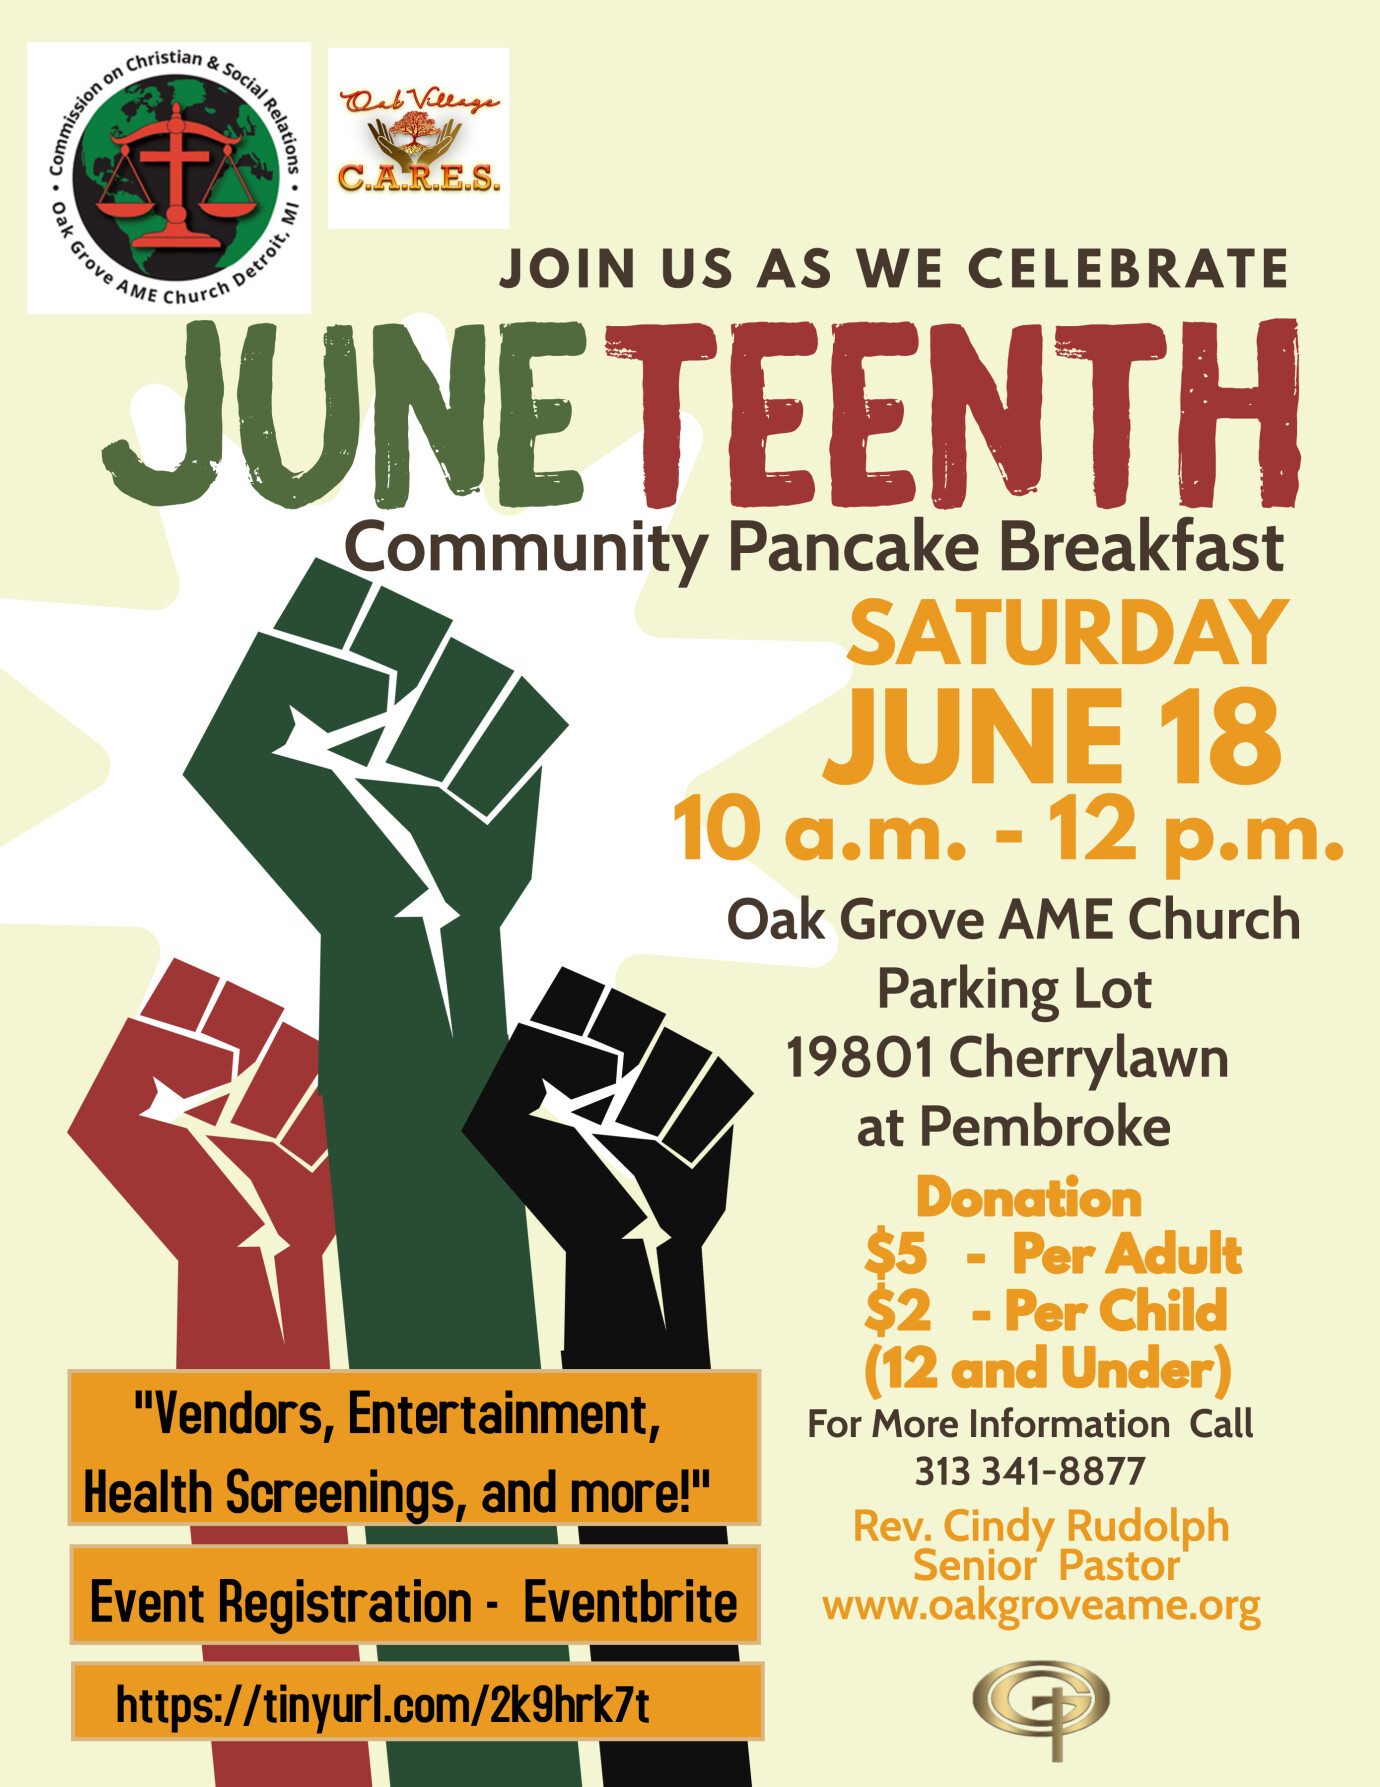 CC & SR Juneteenth Community Event